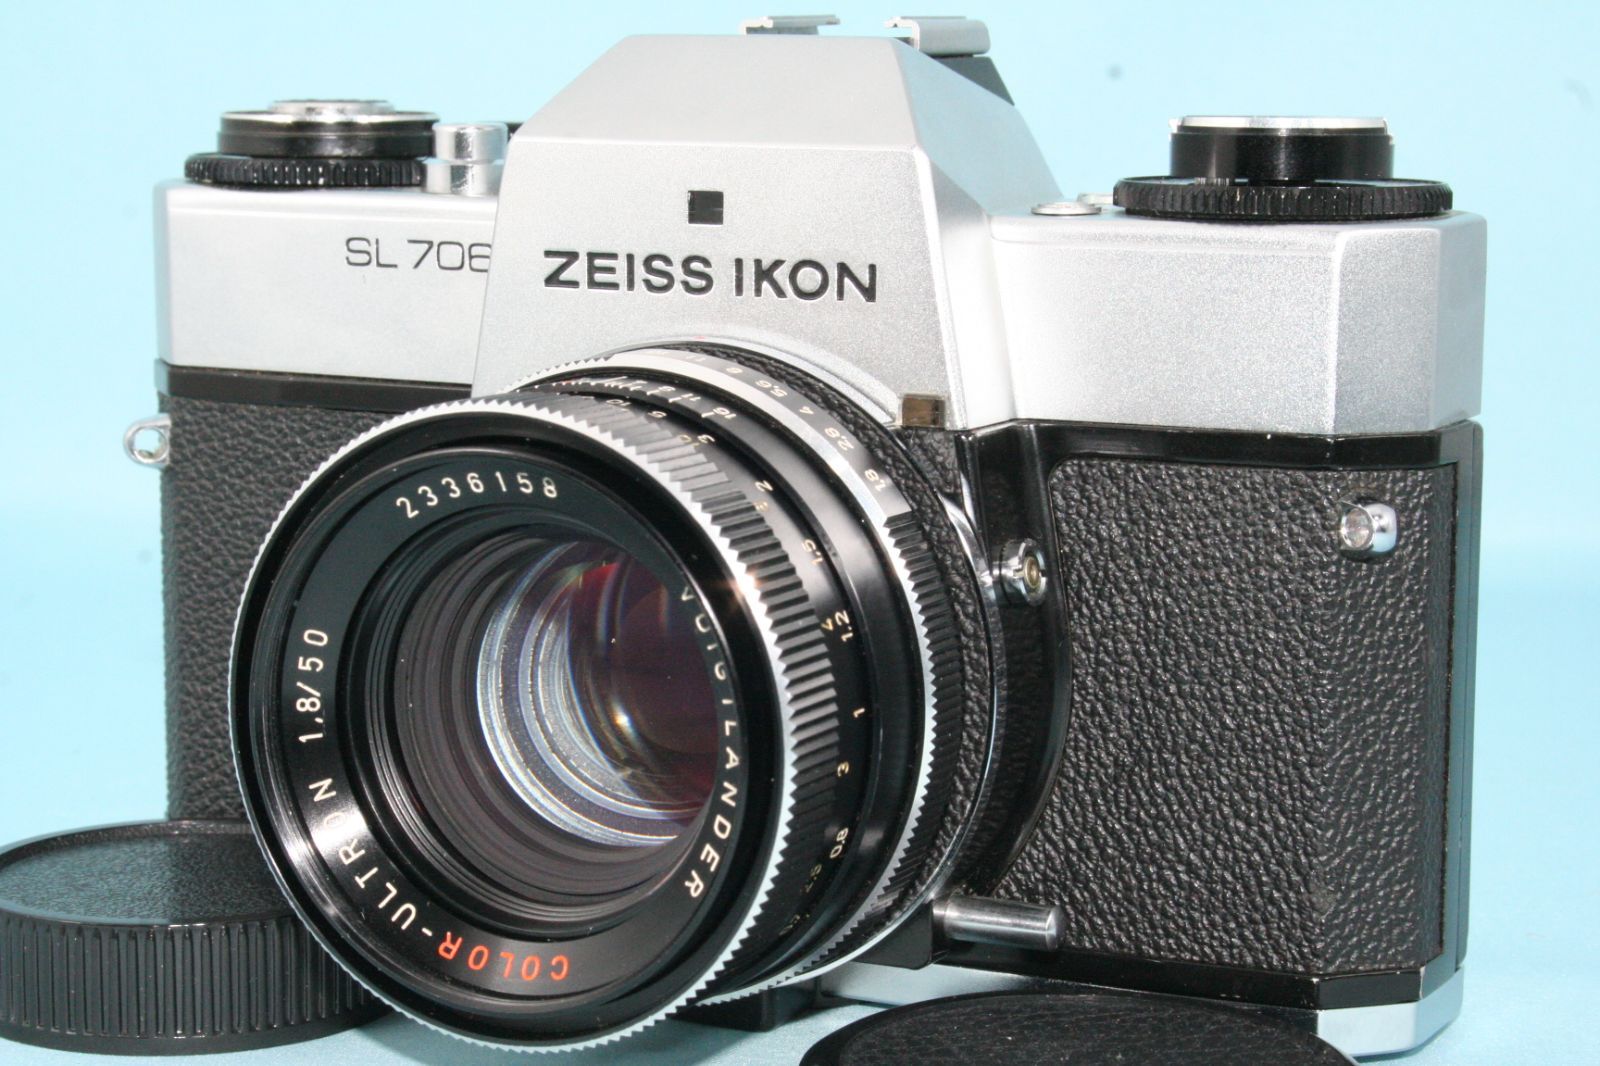 希少 Zeiss Ikon SL706 + ULTRON 50mm 1.8